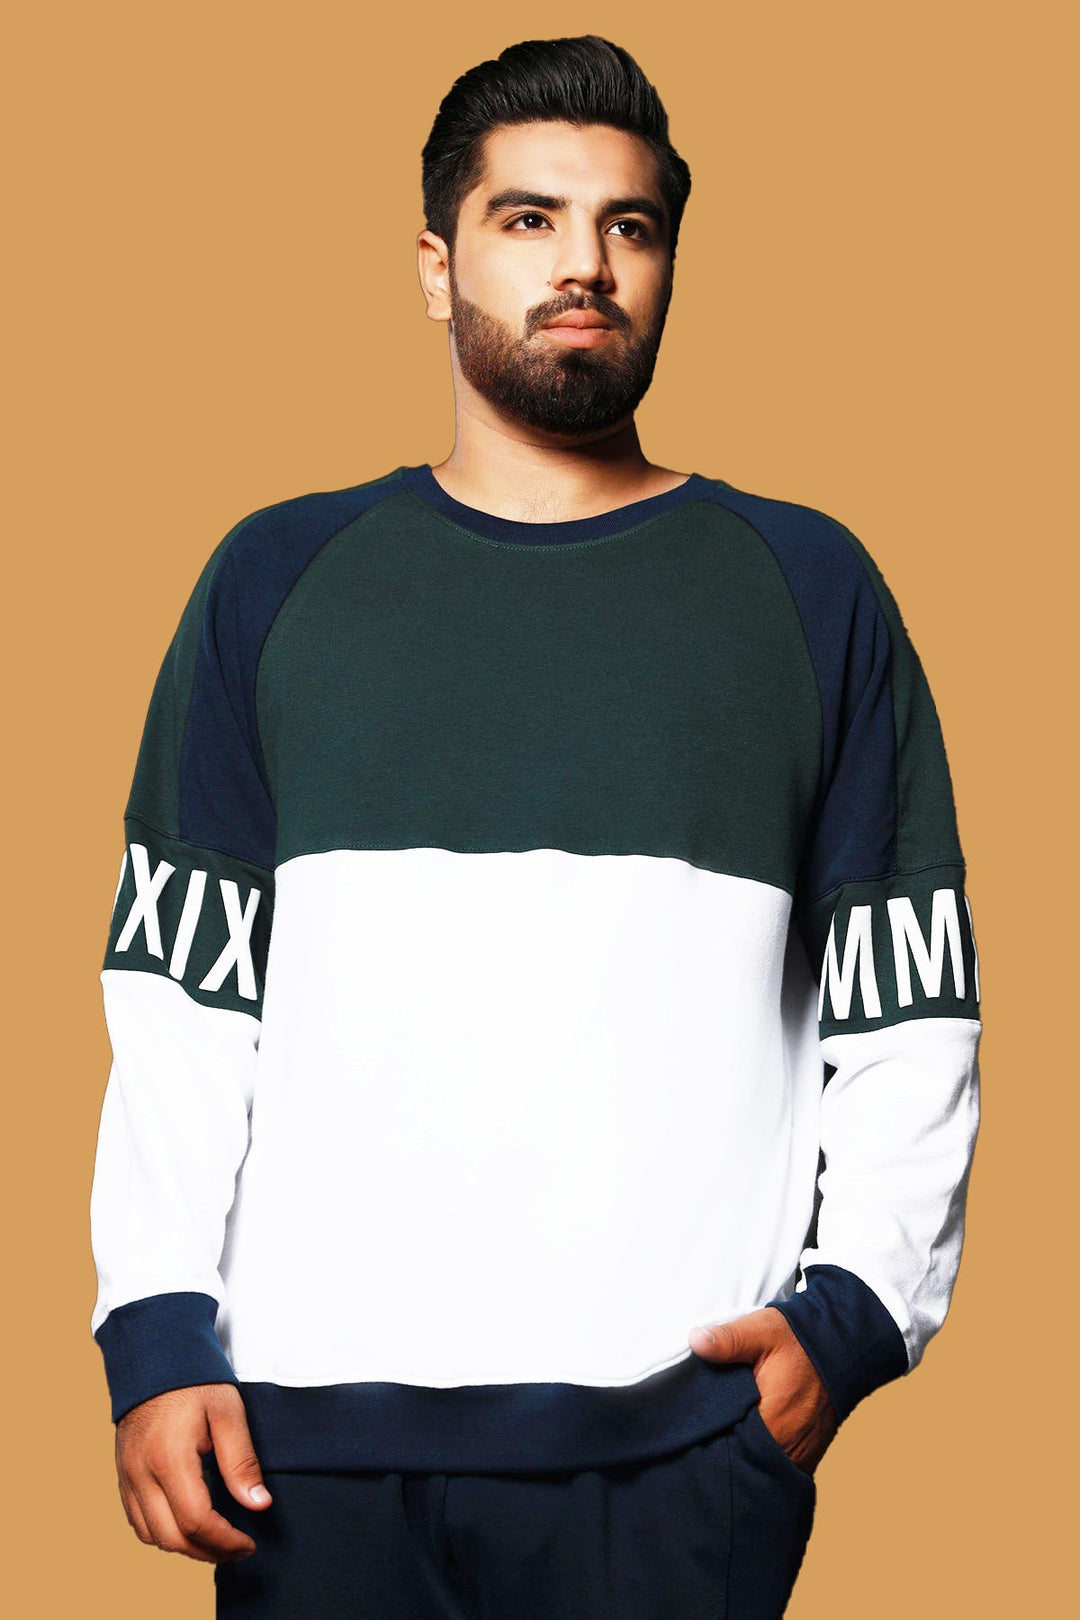 Teal & Blue MMXIX Sweatshirt (Plus Size) - W22 - MSW046P